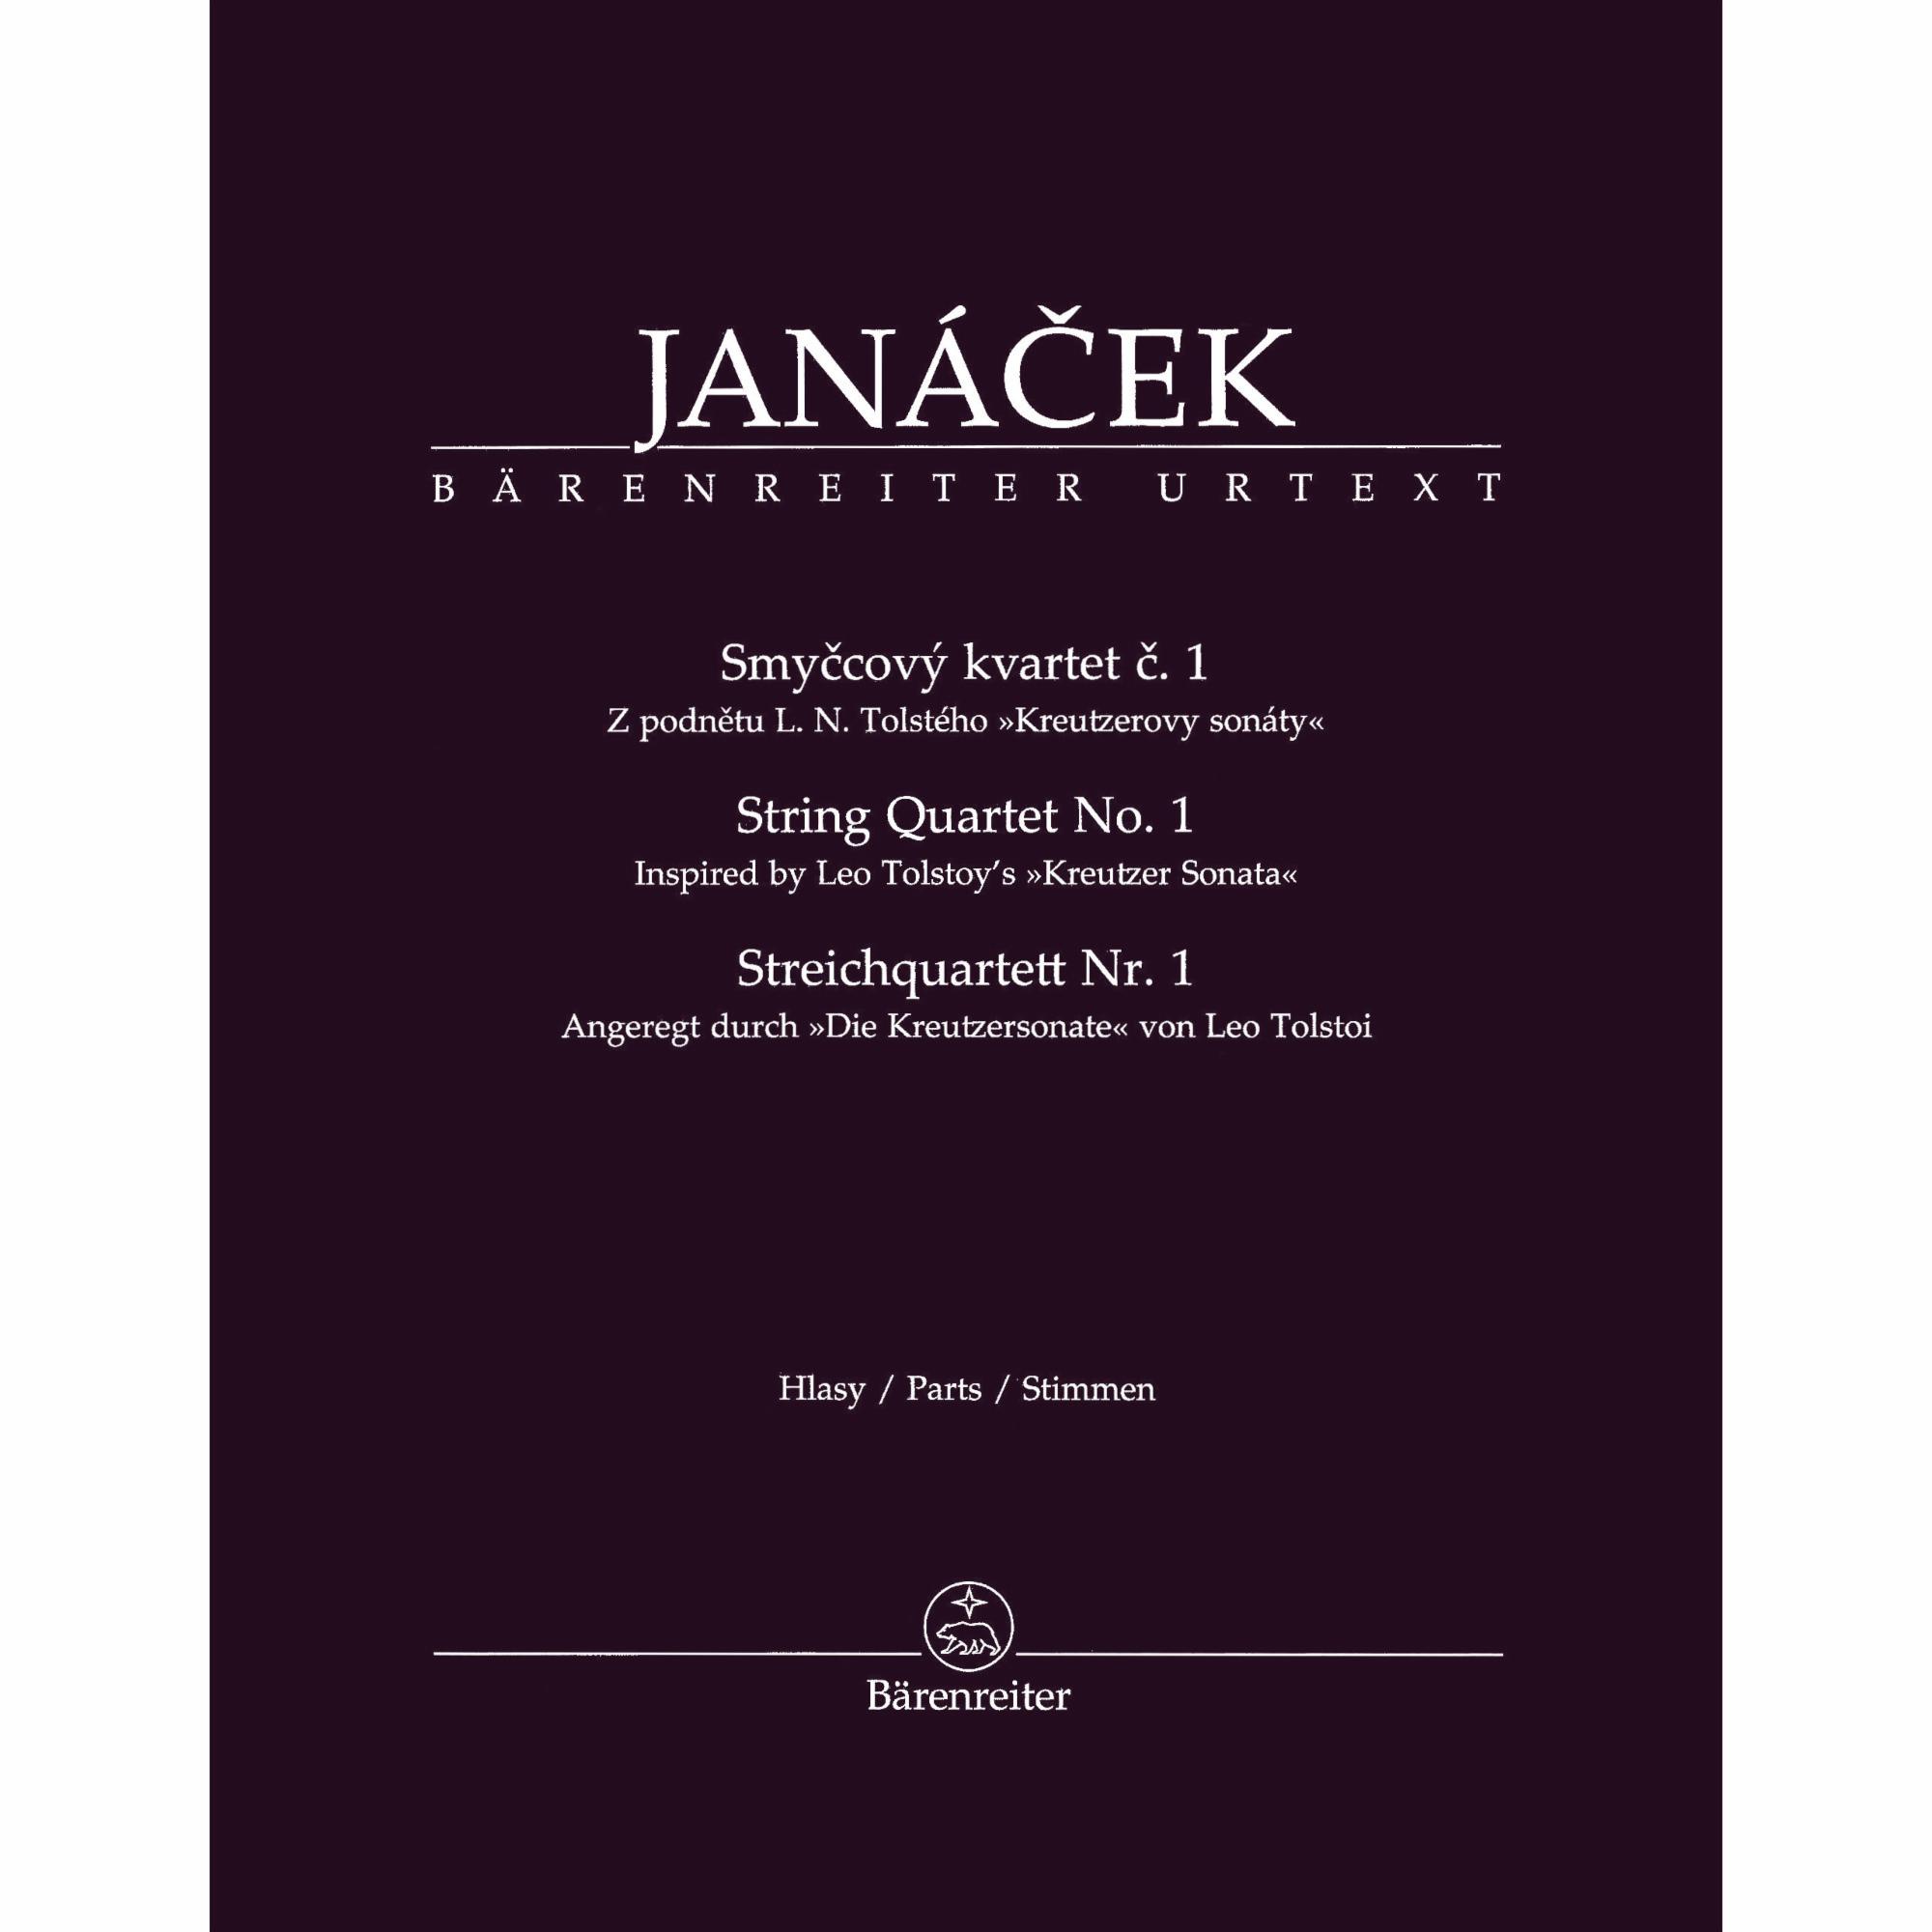 Janacek -- String Quartet No. 1 (Kreutzer Sonata)